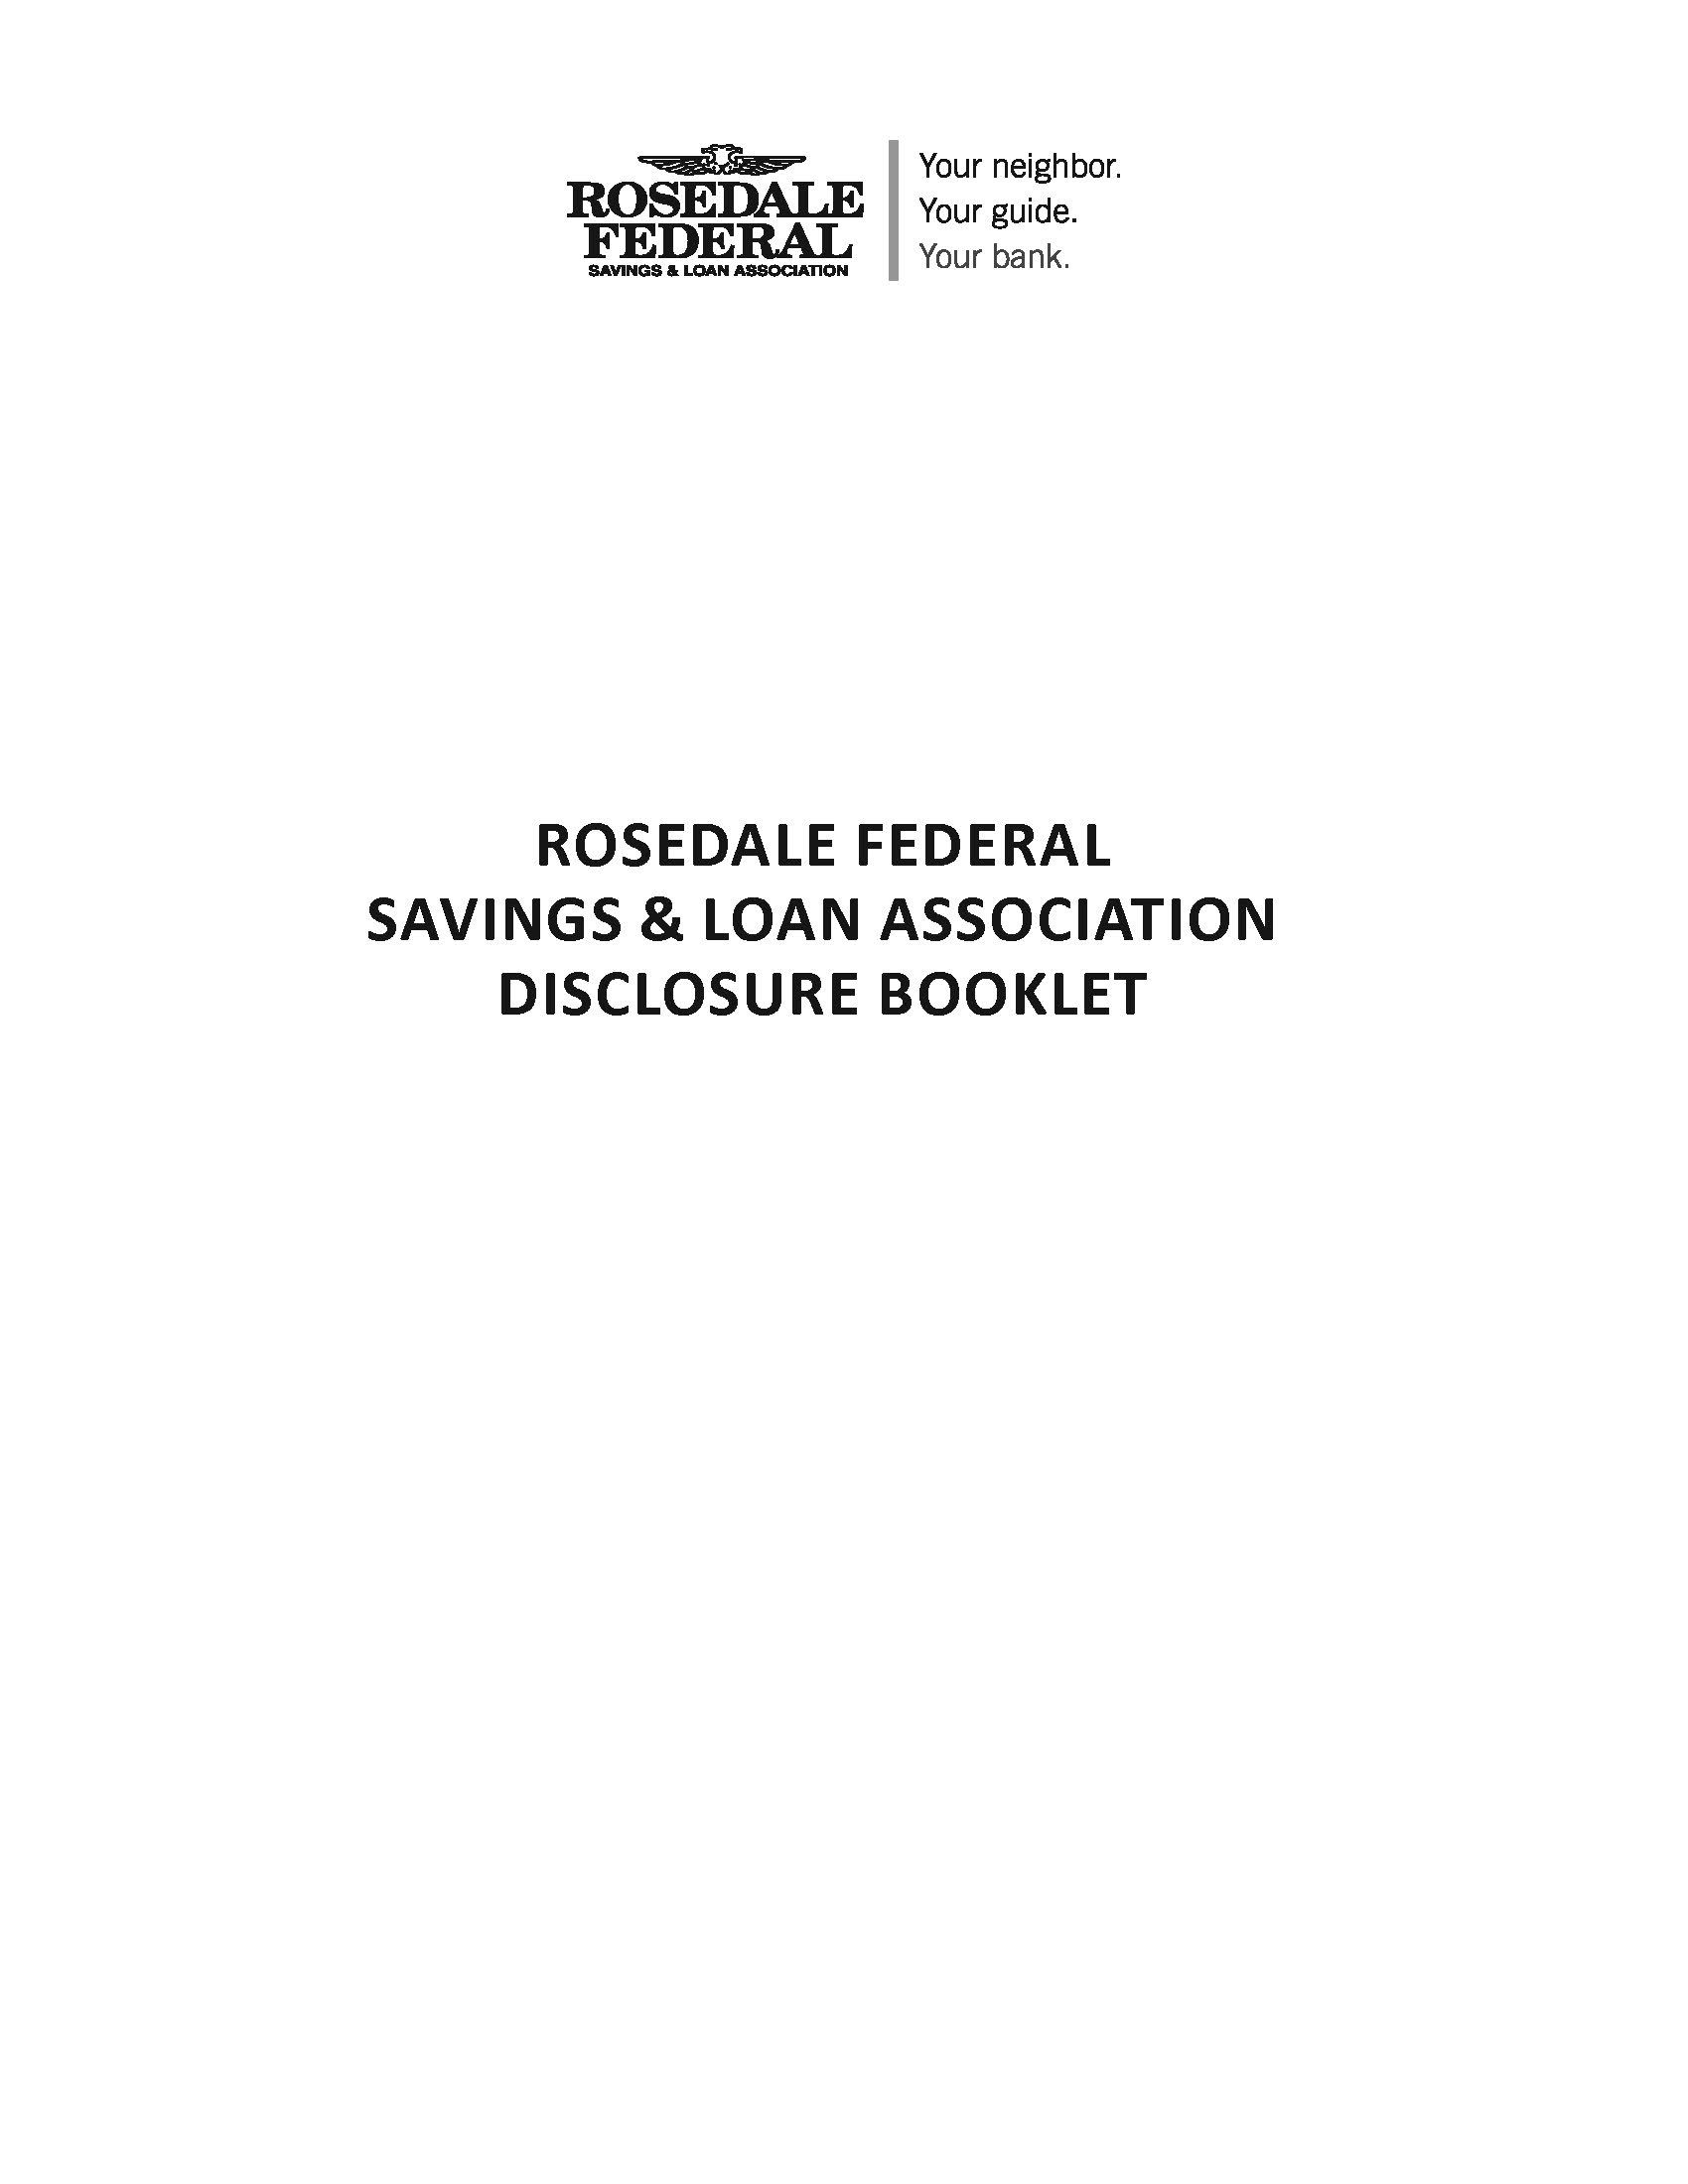 Chesapeake Bank disclosure booklet